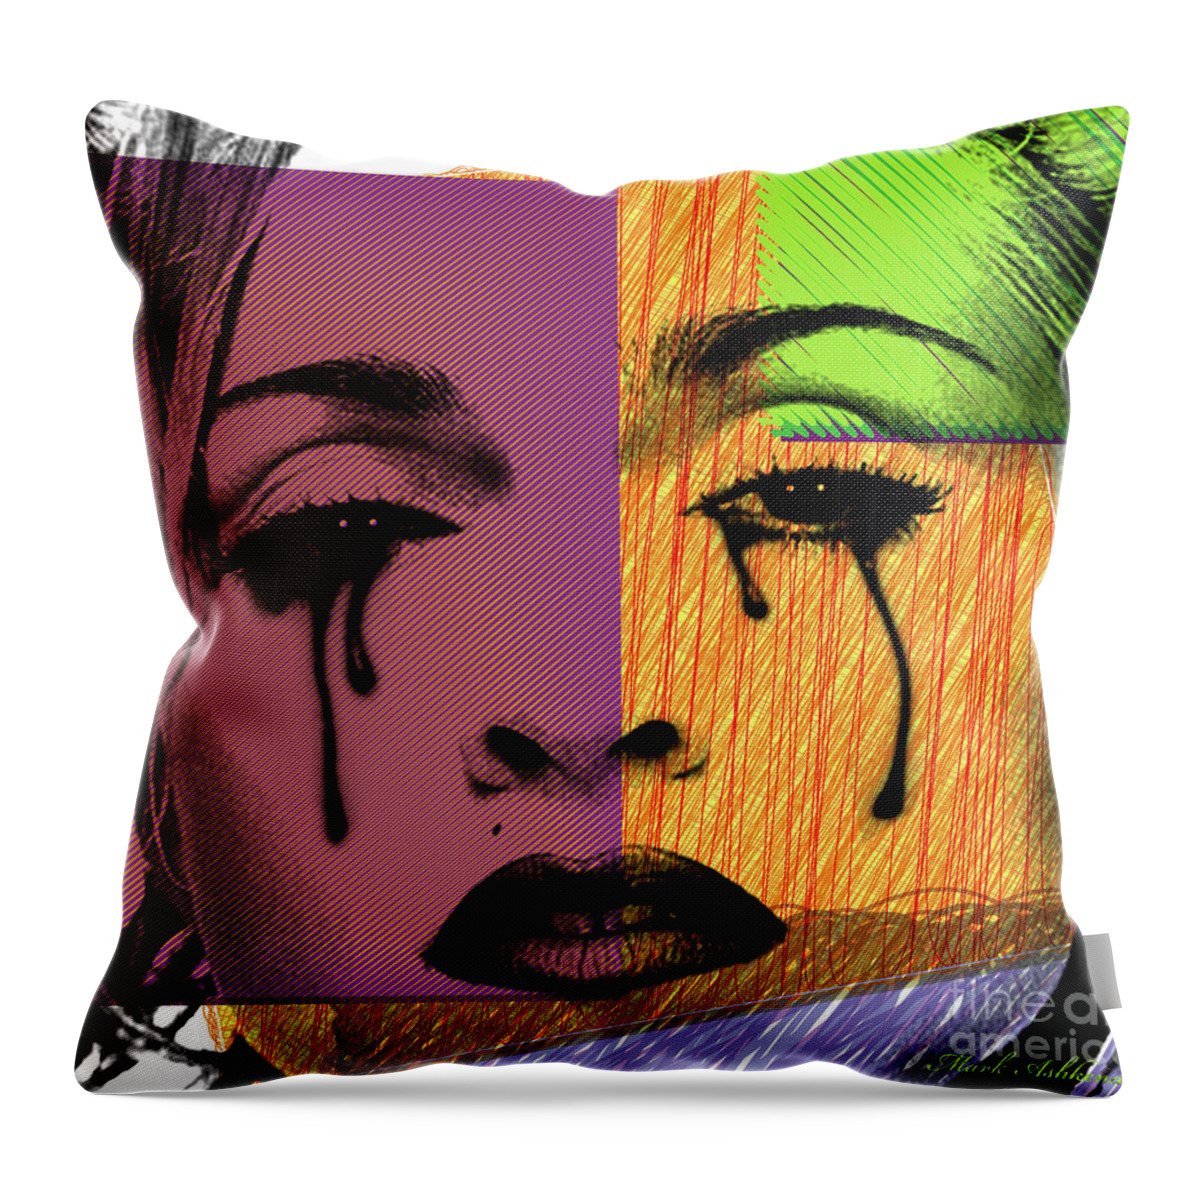 Madonna Throw Pillow featuring the digital art Madonna 3 by Mark Ashkenazi